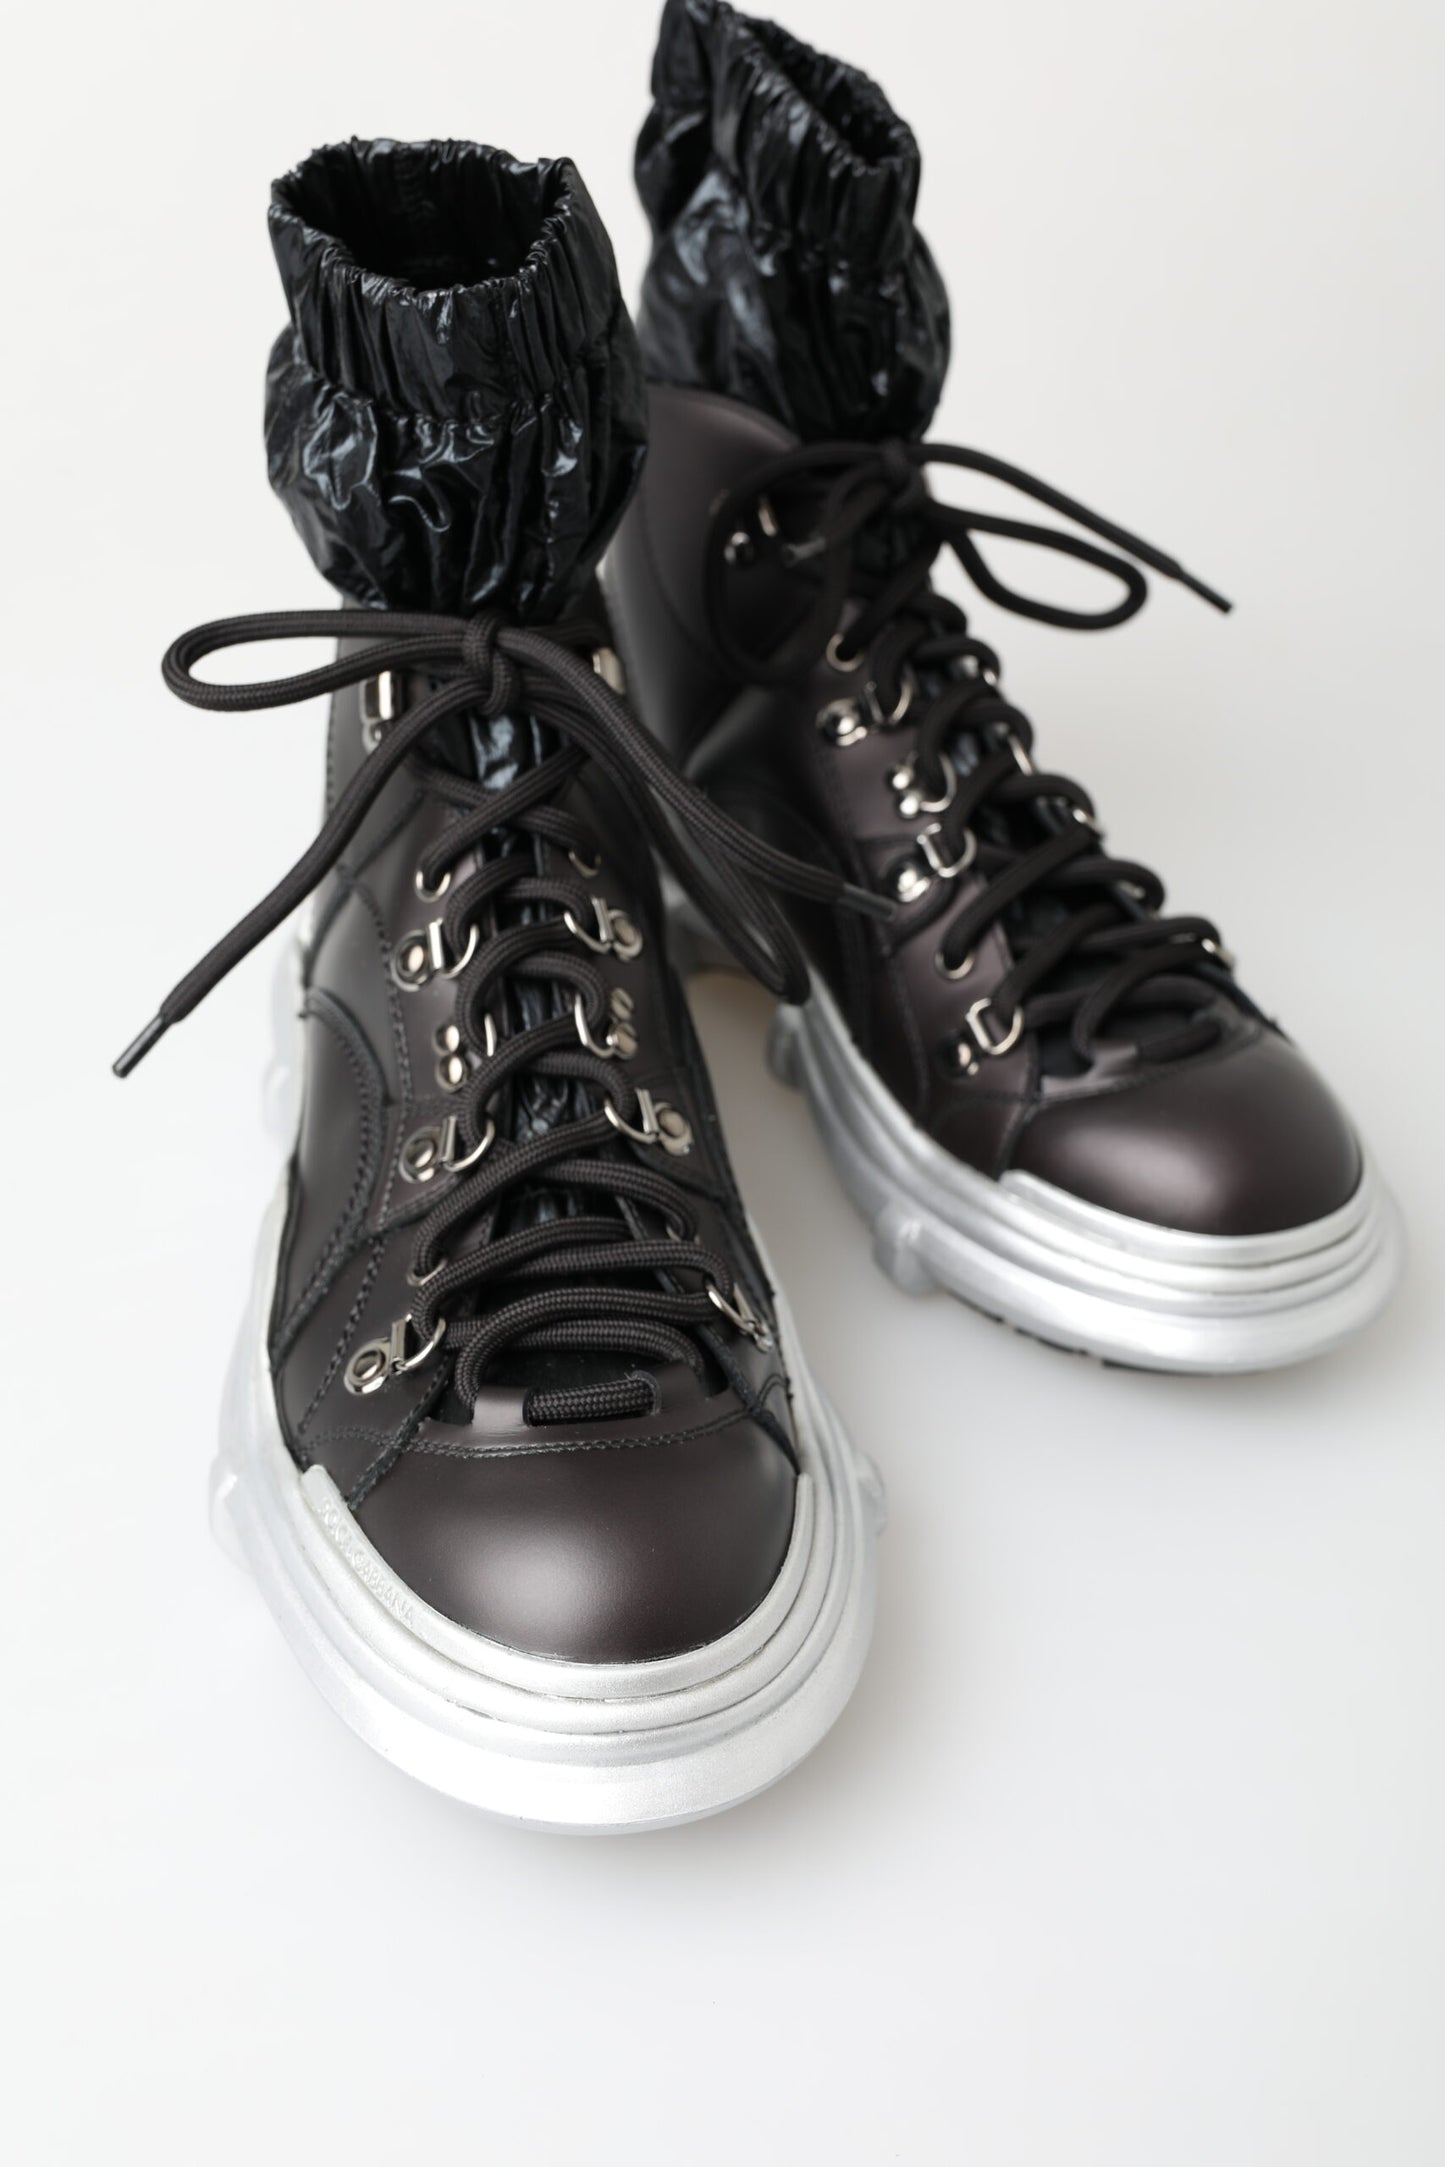 Dolce & Gabbana Black Nylon Galileo High Top Sneakers Chaussures